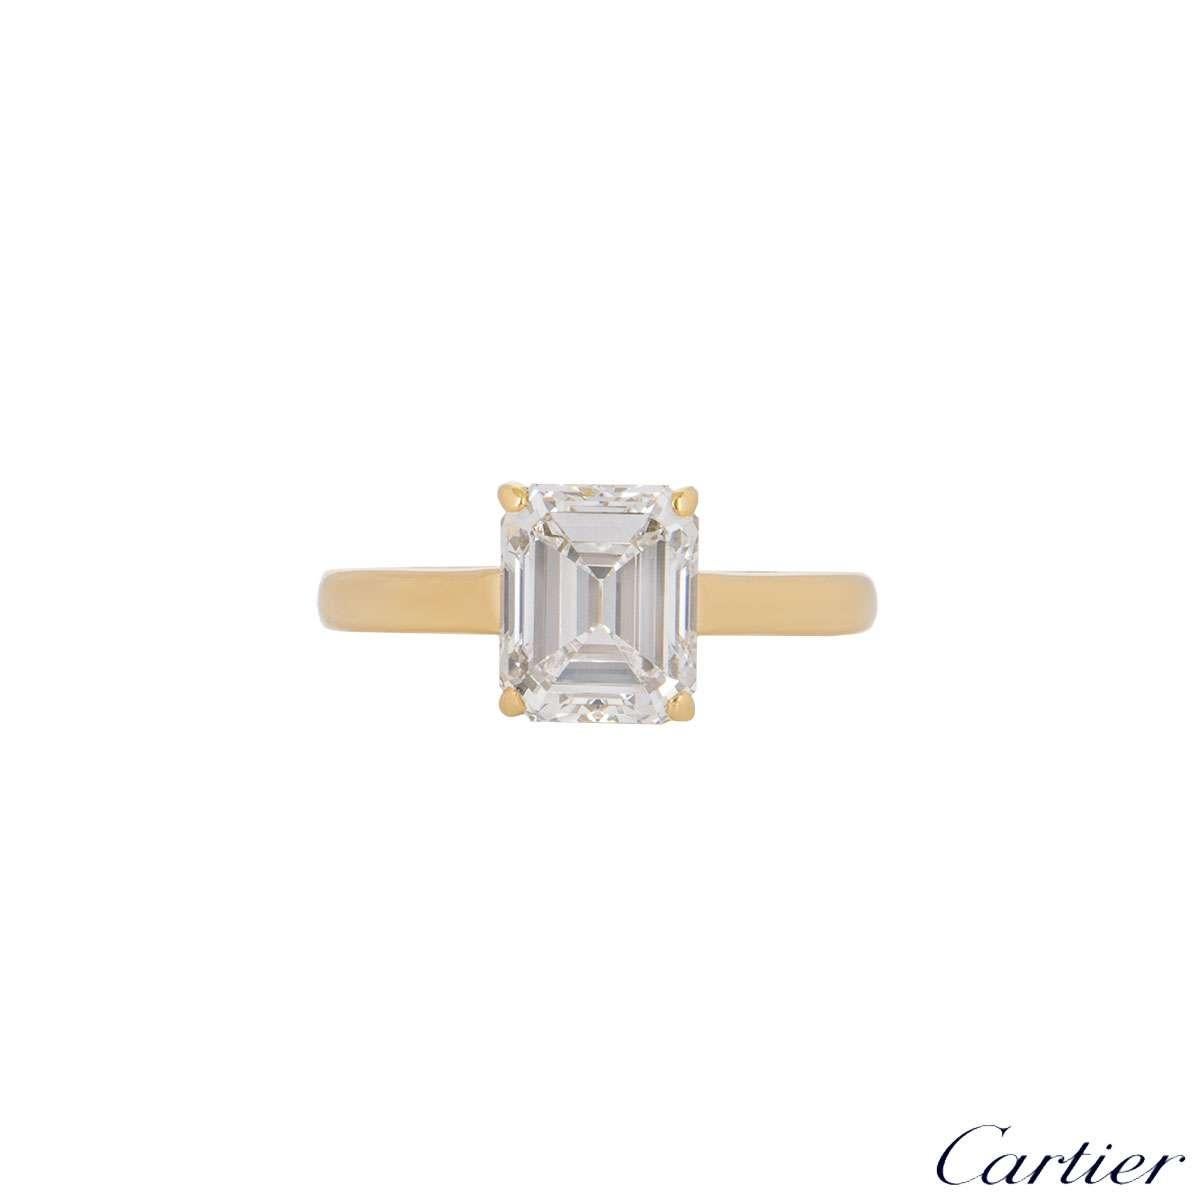 cartier emerald cut diamond ring